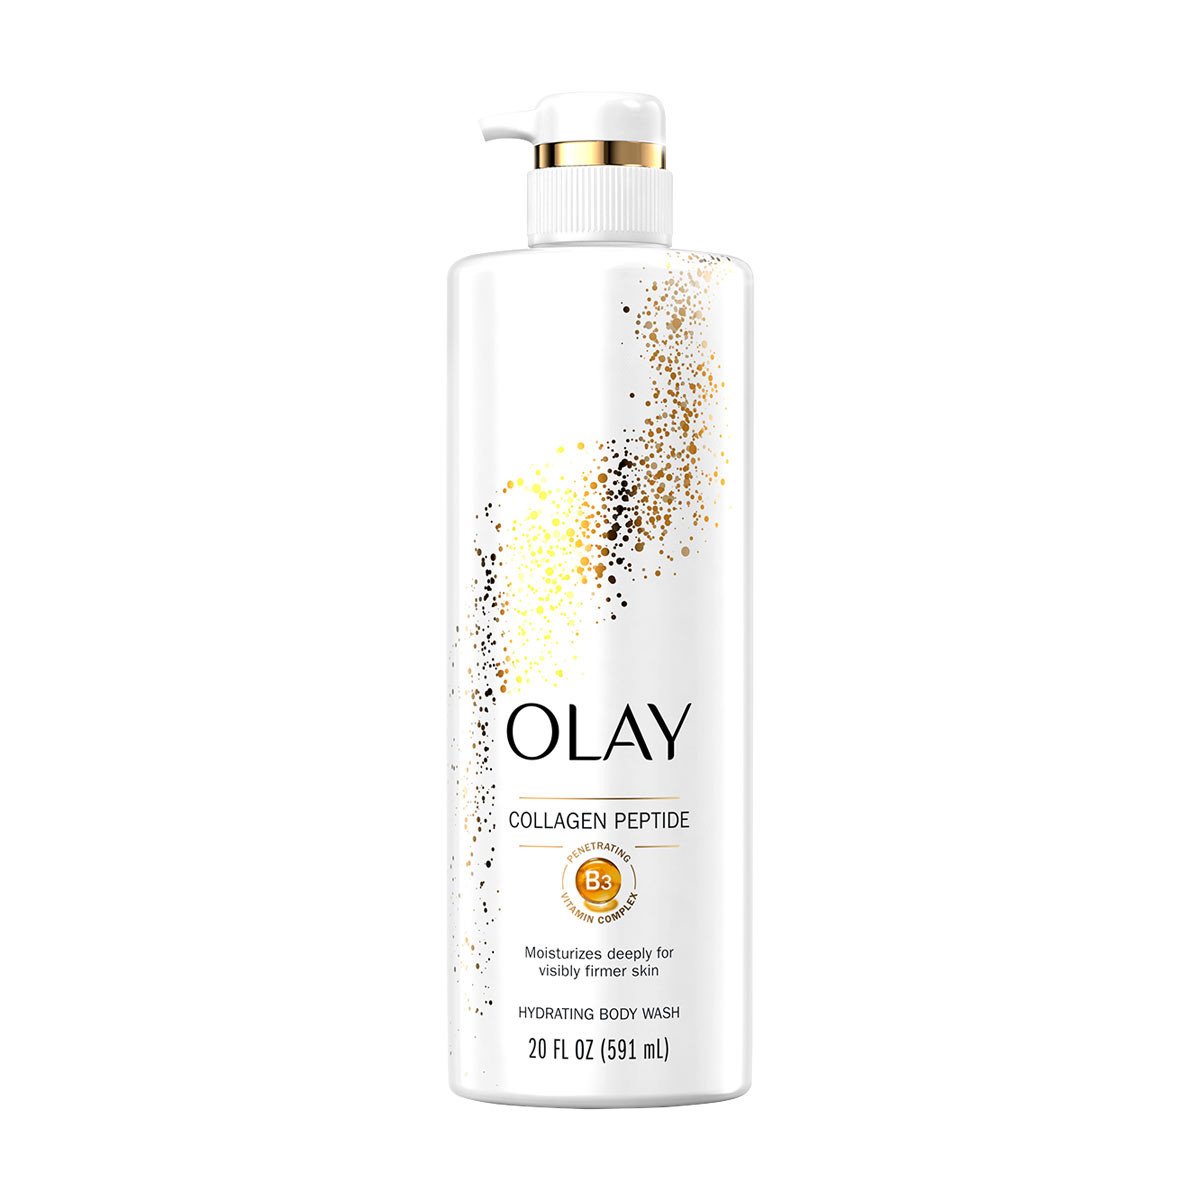 Olay Hydrating Body Wash with Collagen Peptide, 20 fl oz